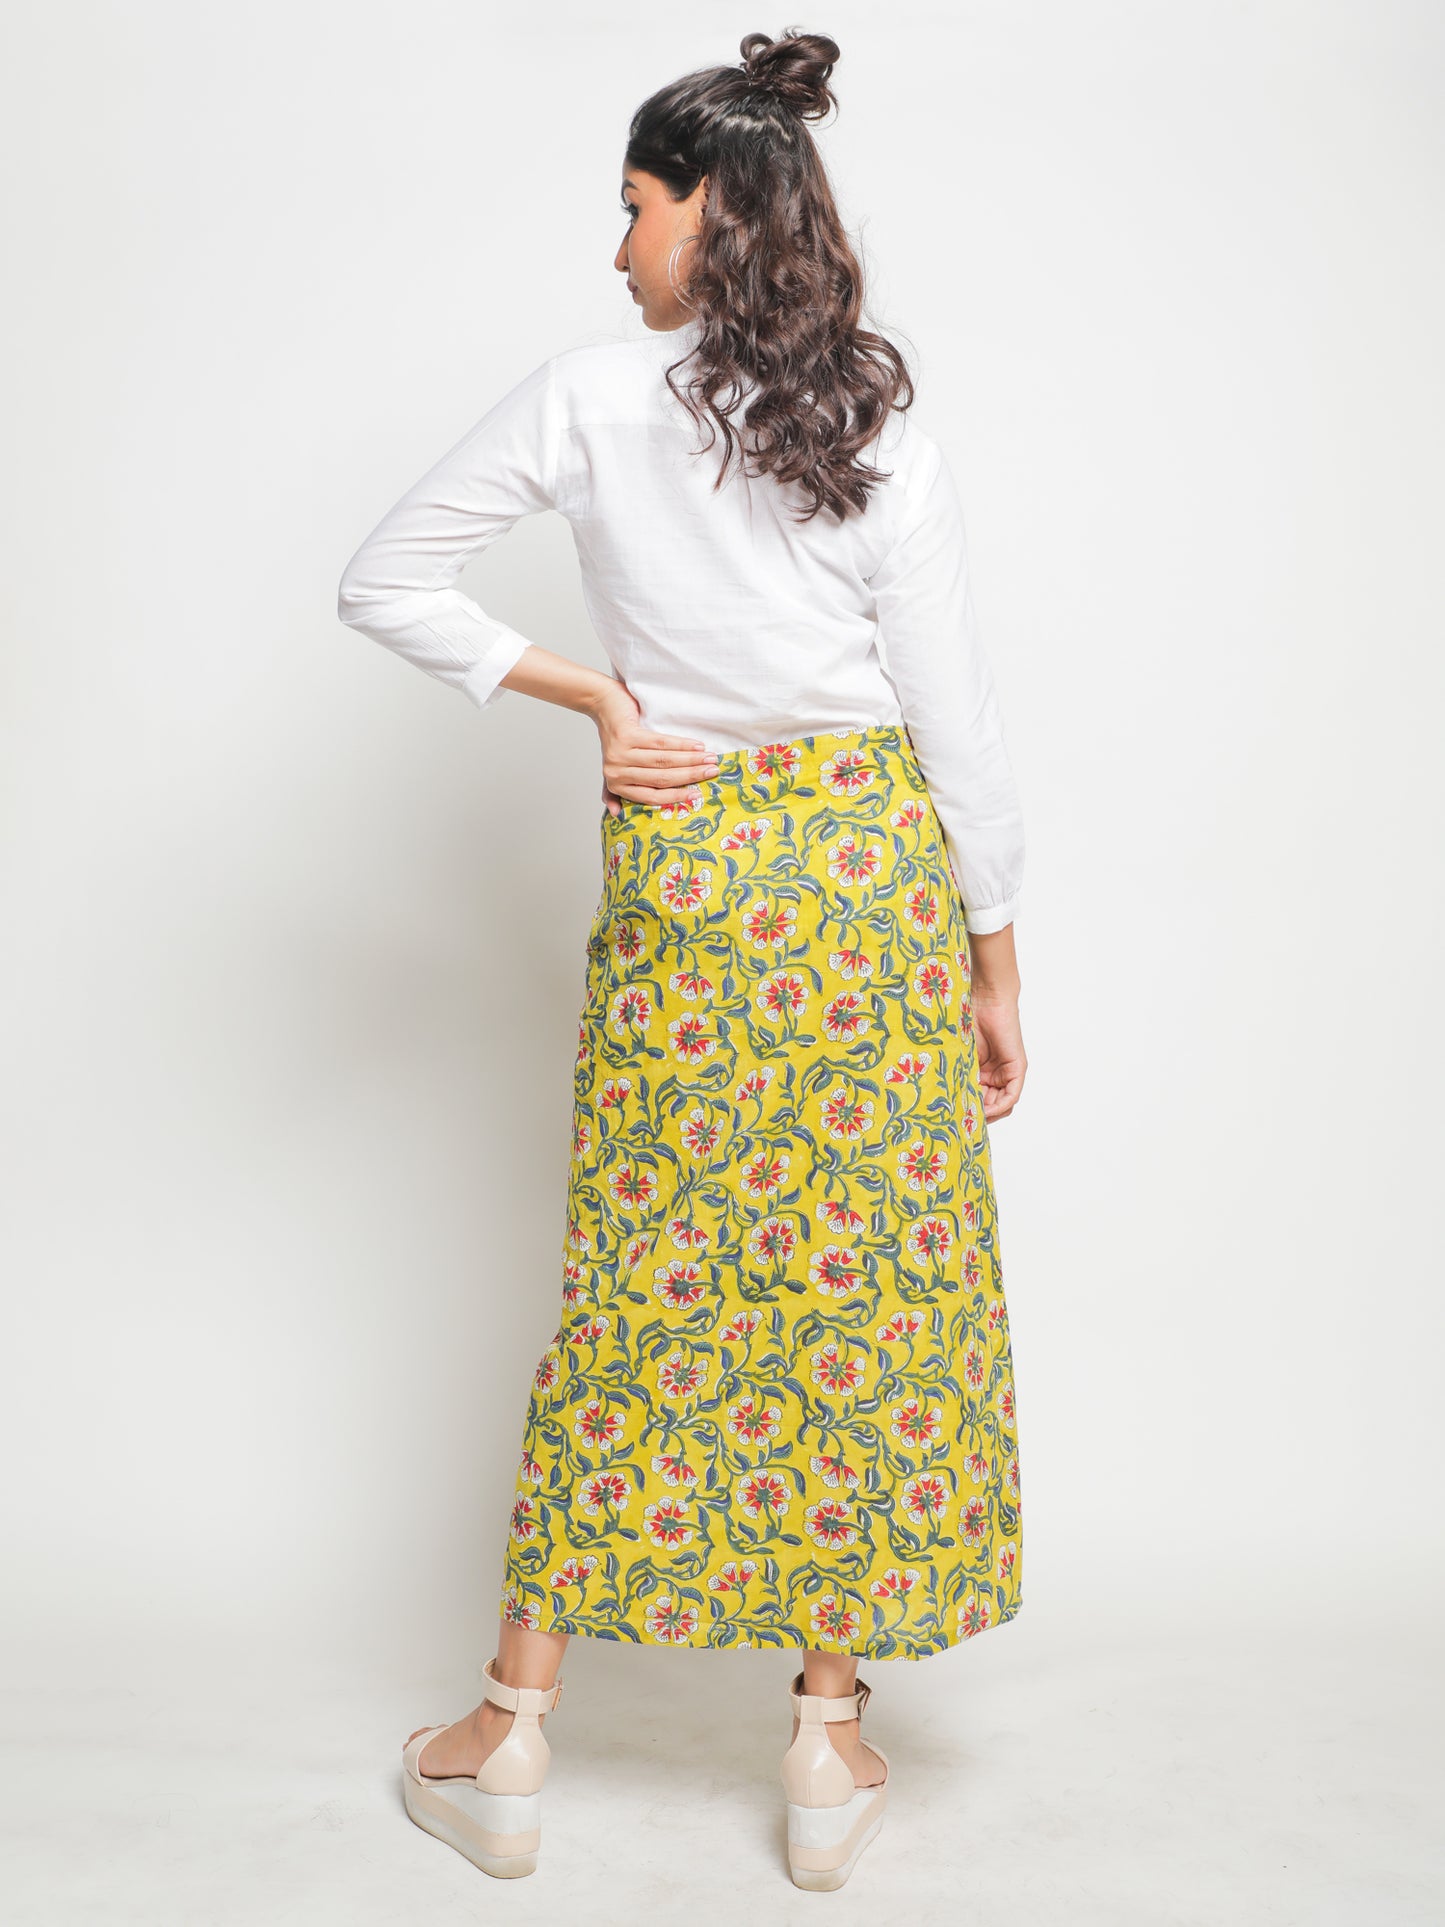 Makeba Skirt - Yellow Hand Block Printed Cotton Skirt With Border Detailing